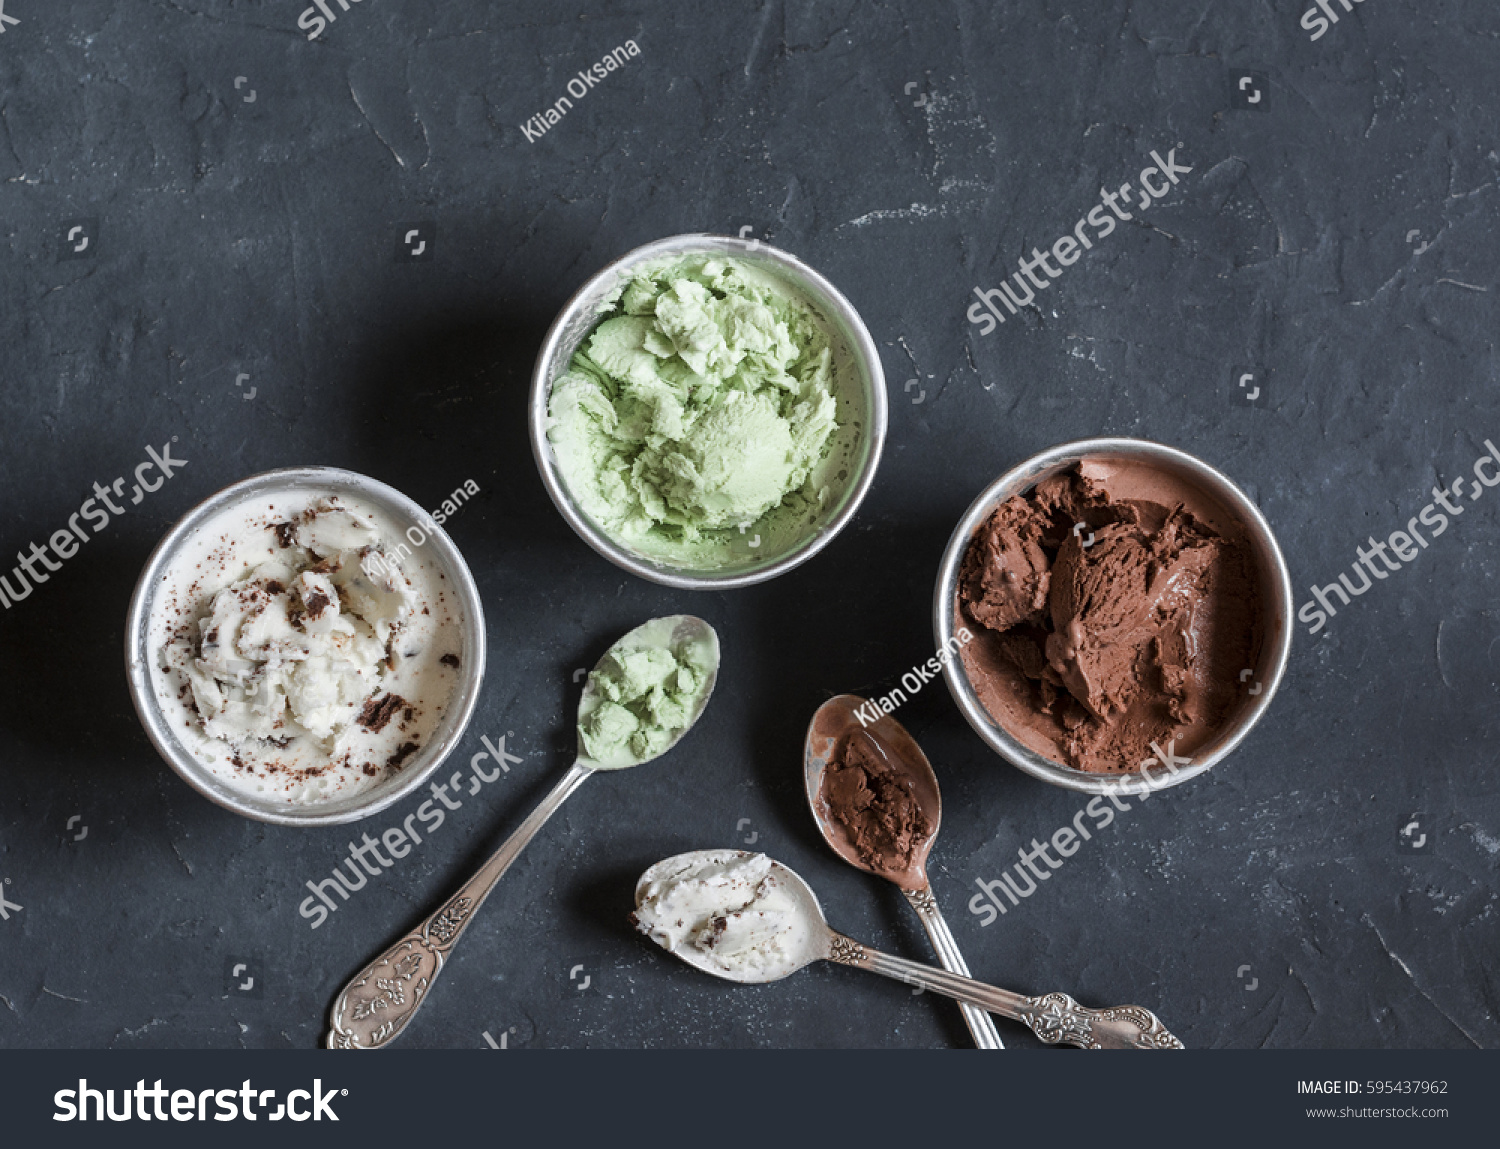 Range of coconut milk ice cream with chocolate, matcha powder, chocolate chips and vanilla. On a dark background, top view. Gluten free vegetarian dessert  #595437962